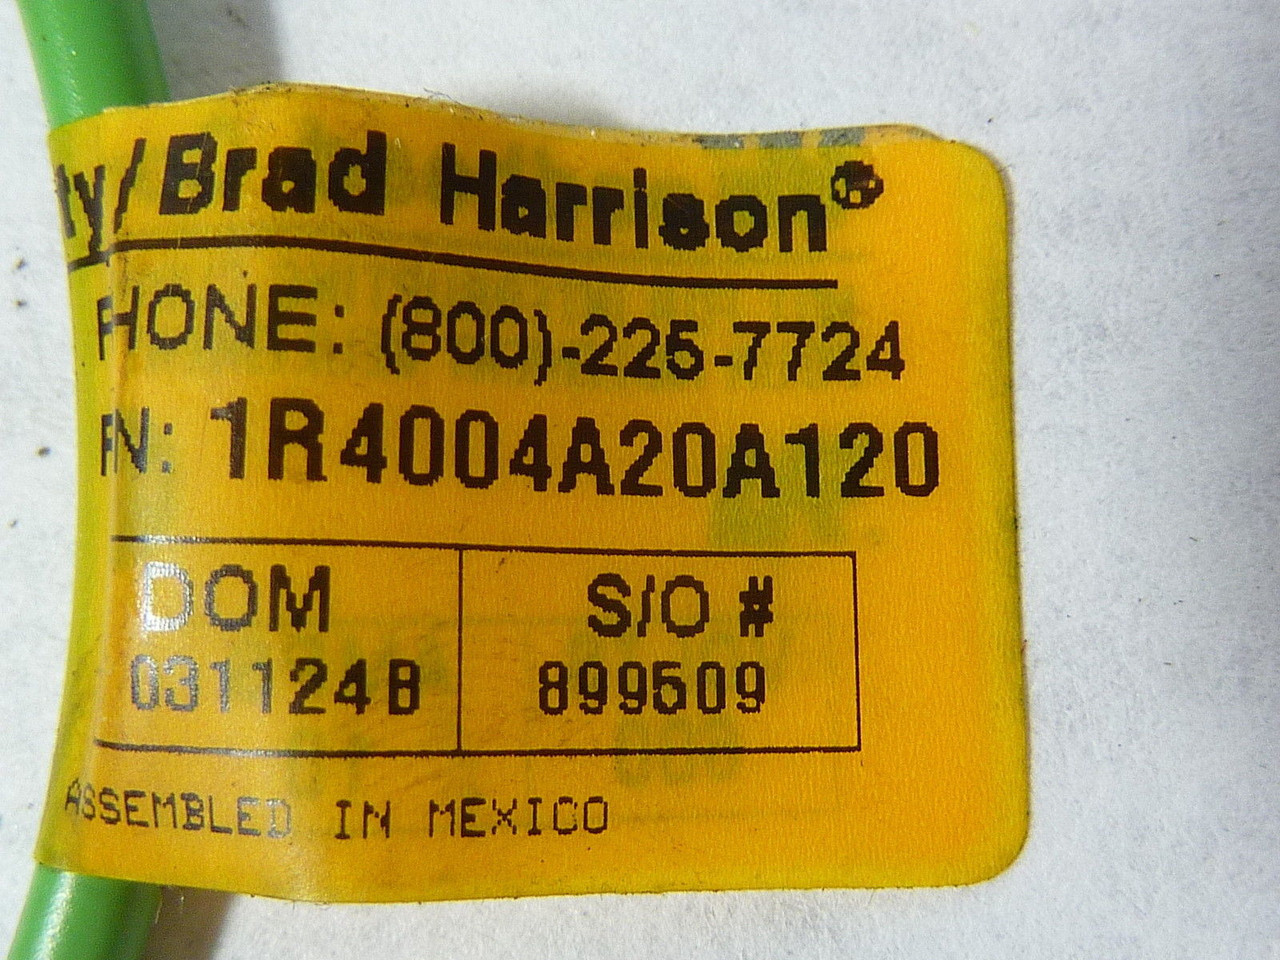 Brad Harrison 1R4004A20A120 Mini Cordset 4 Pole 600V 10A USED